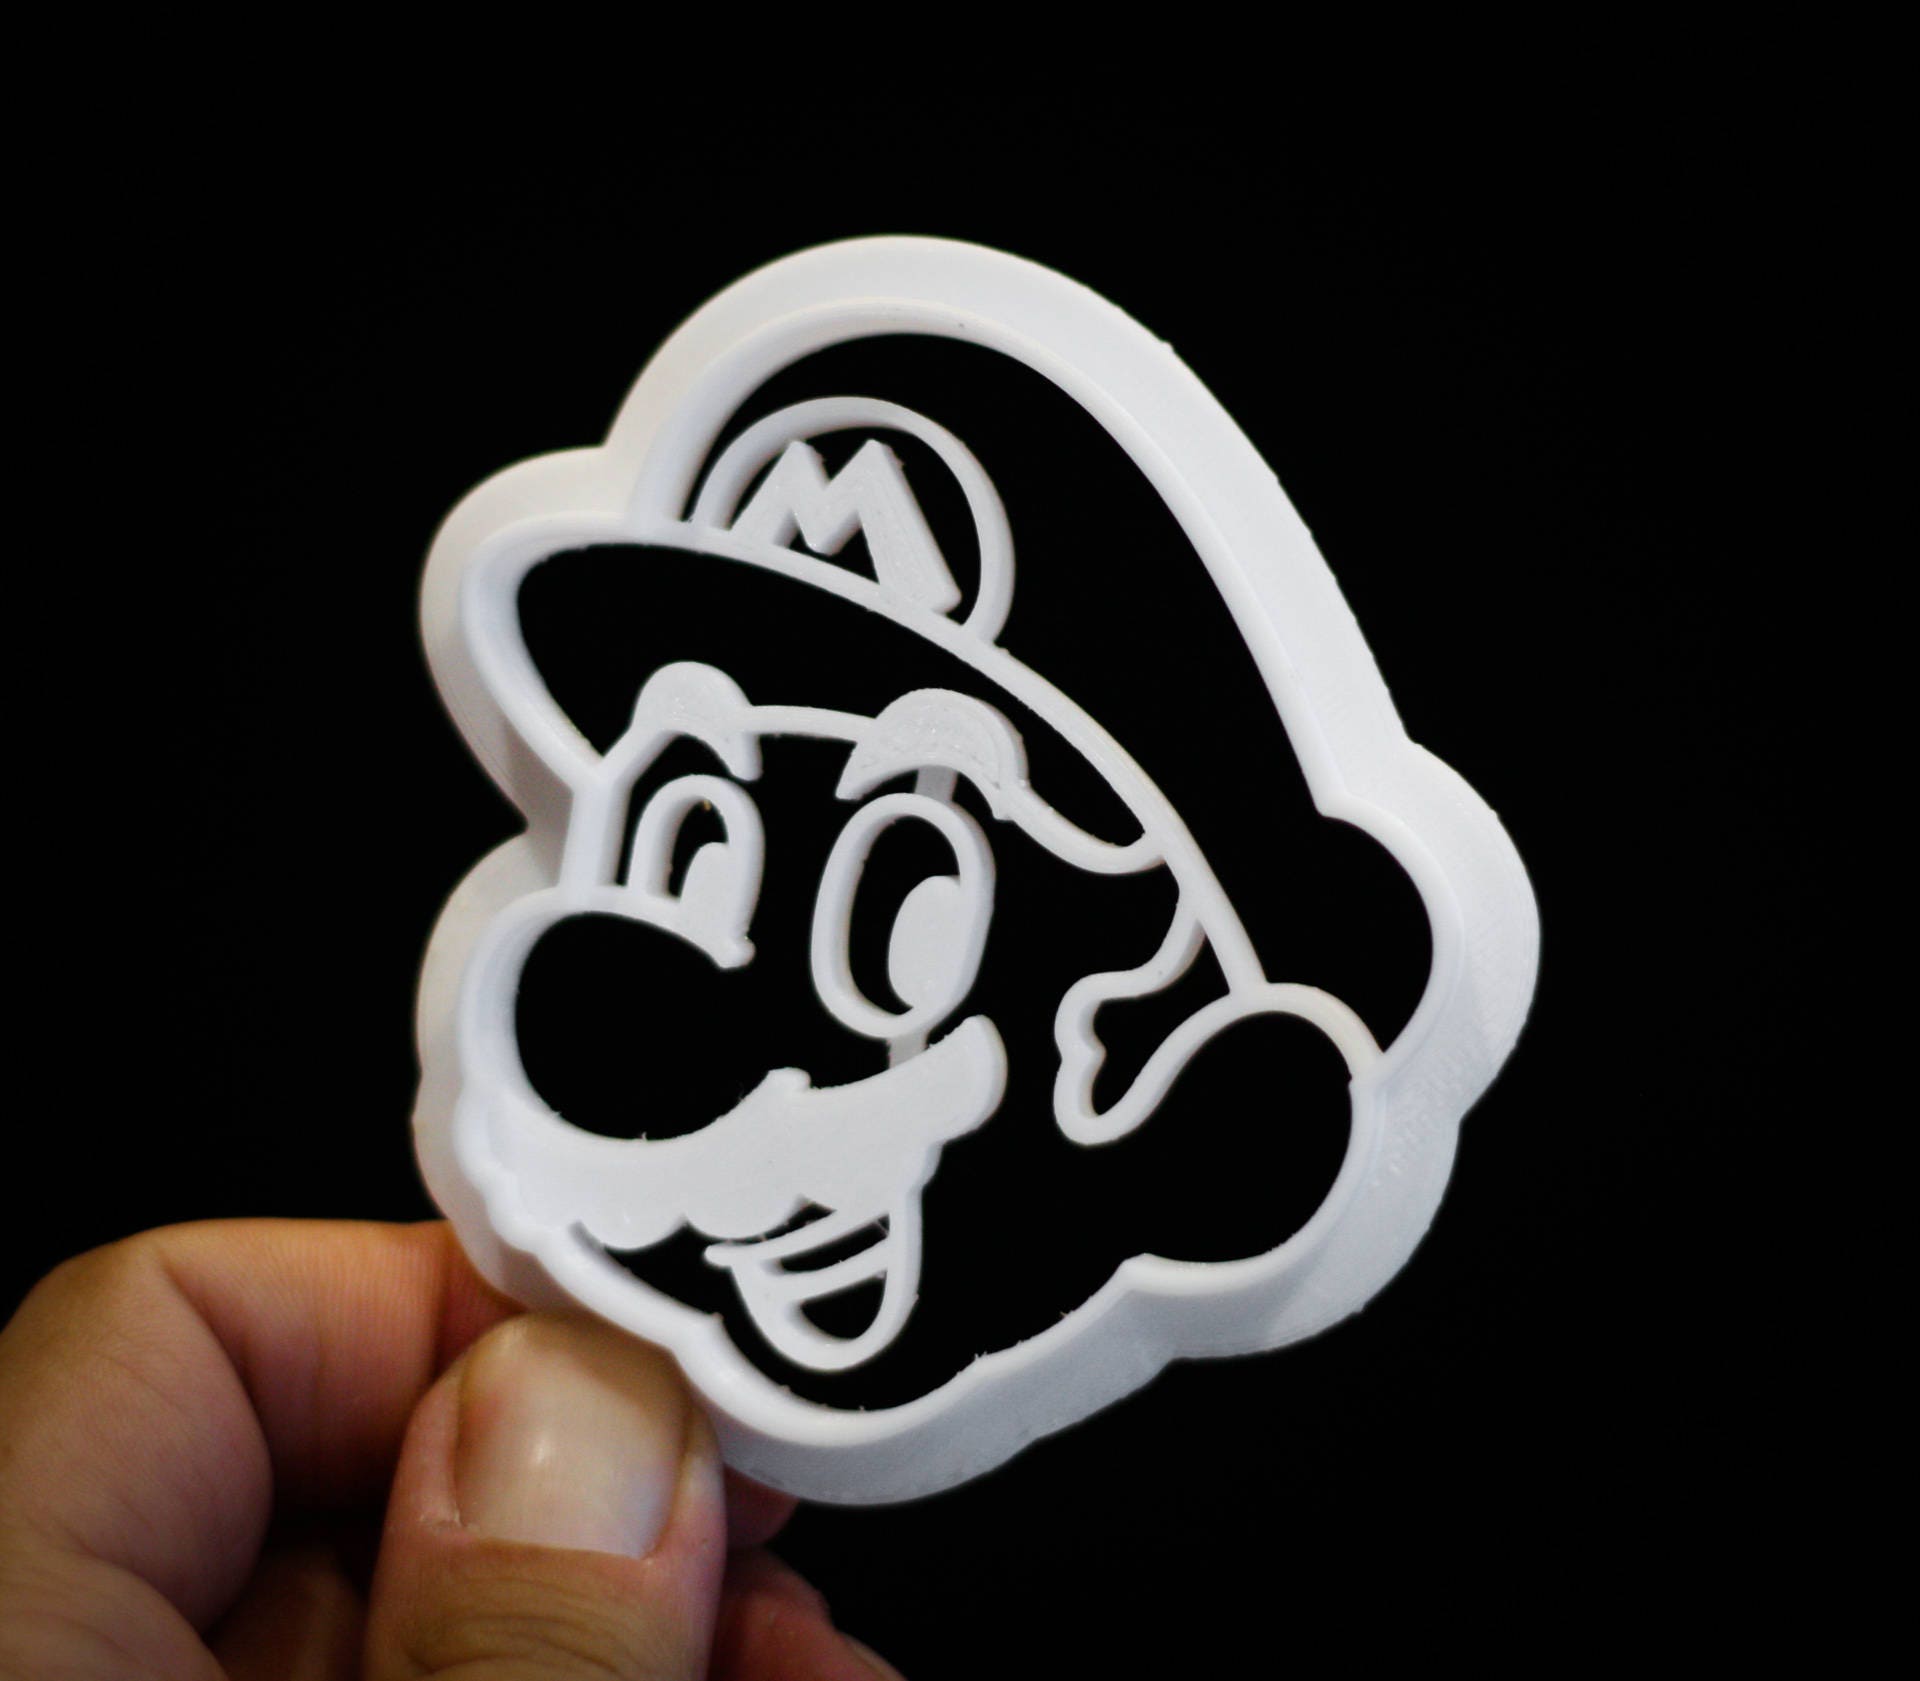 Mario Bros cookie cutter cube